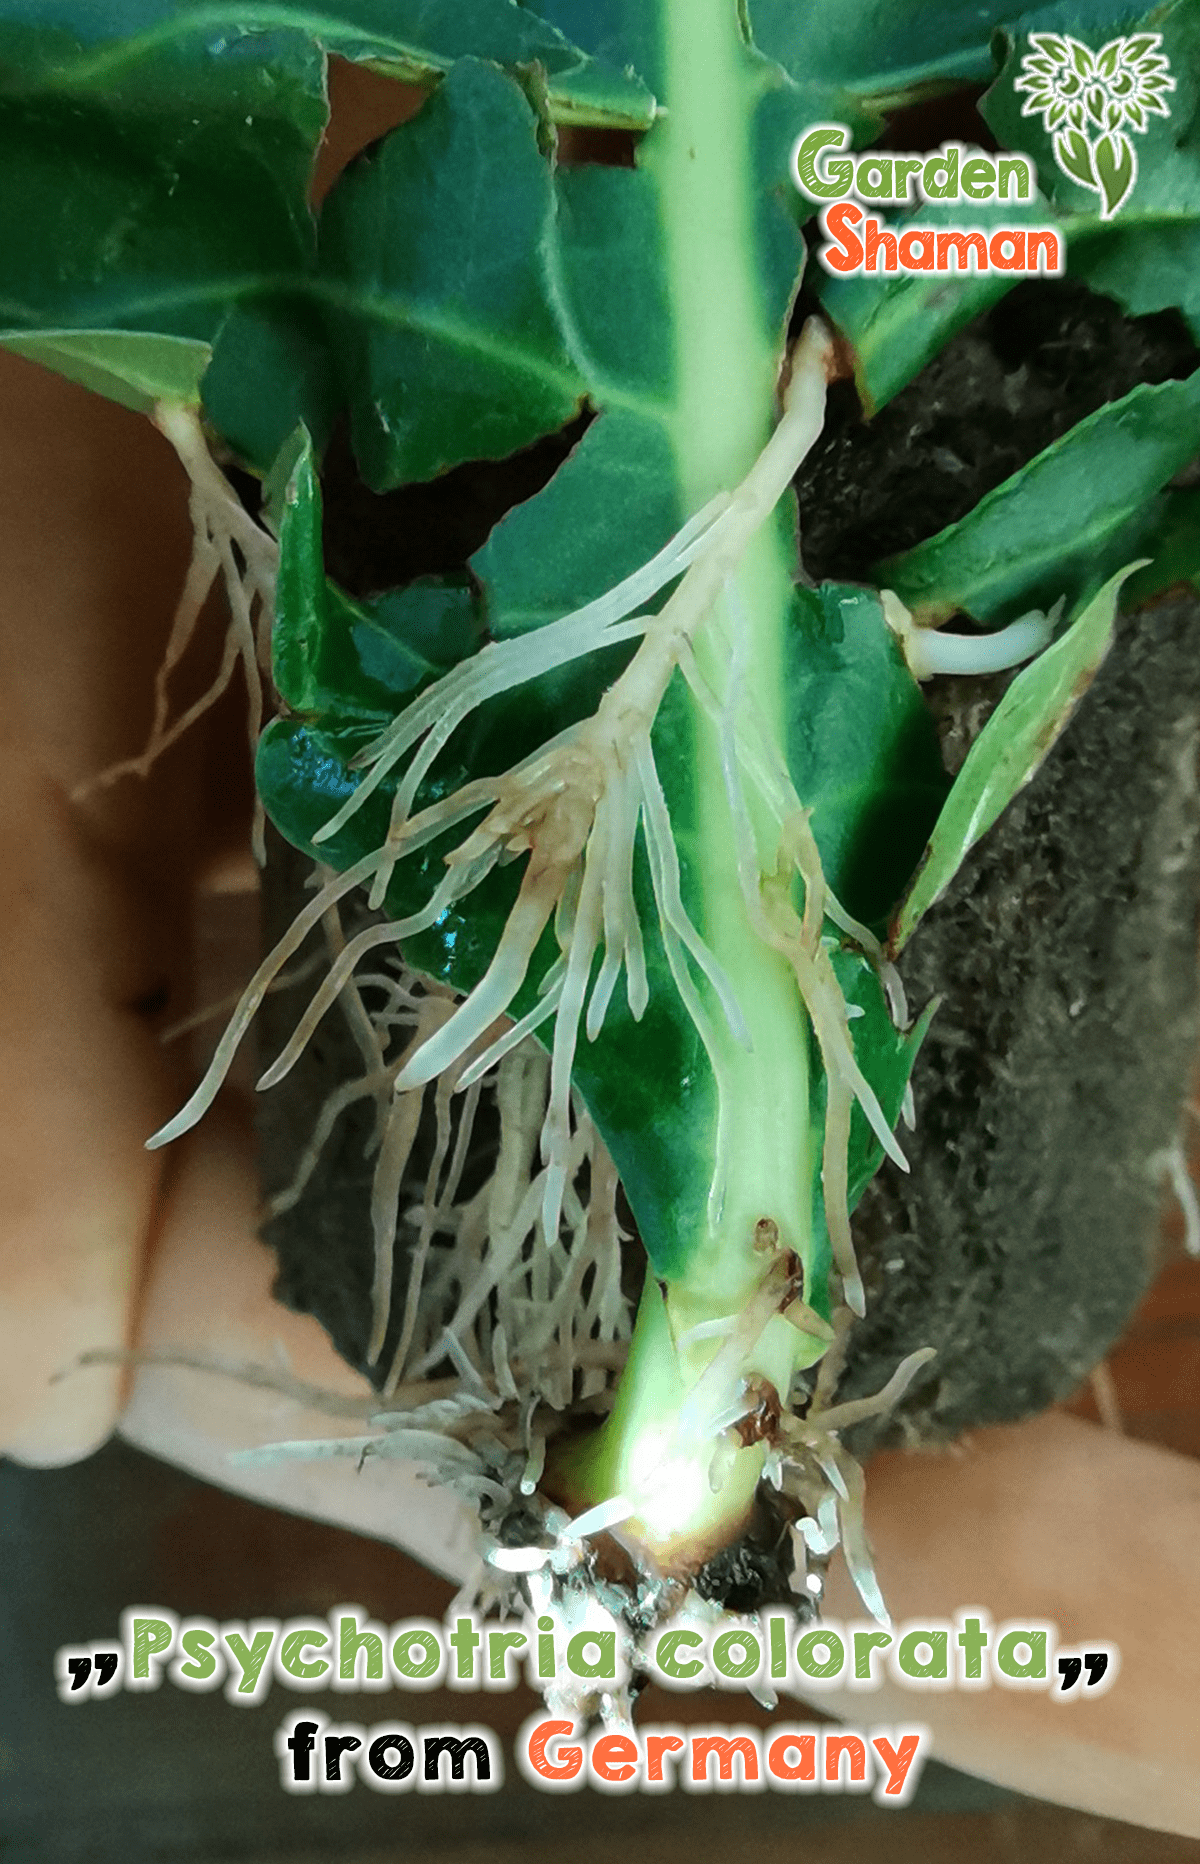 GardenShaman.eu - Psychotria colorata Steckling, cutting, Chacruna